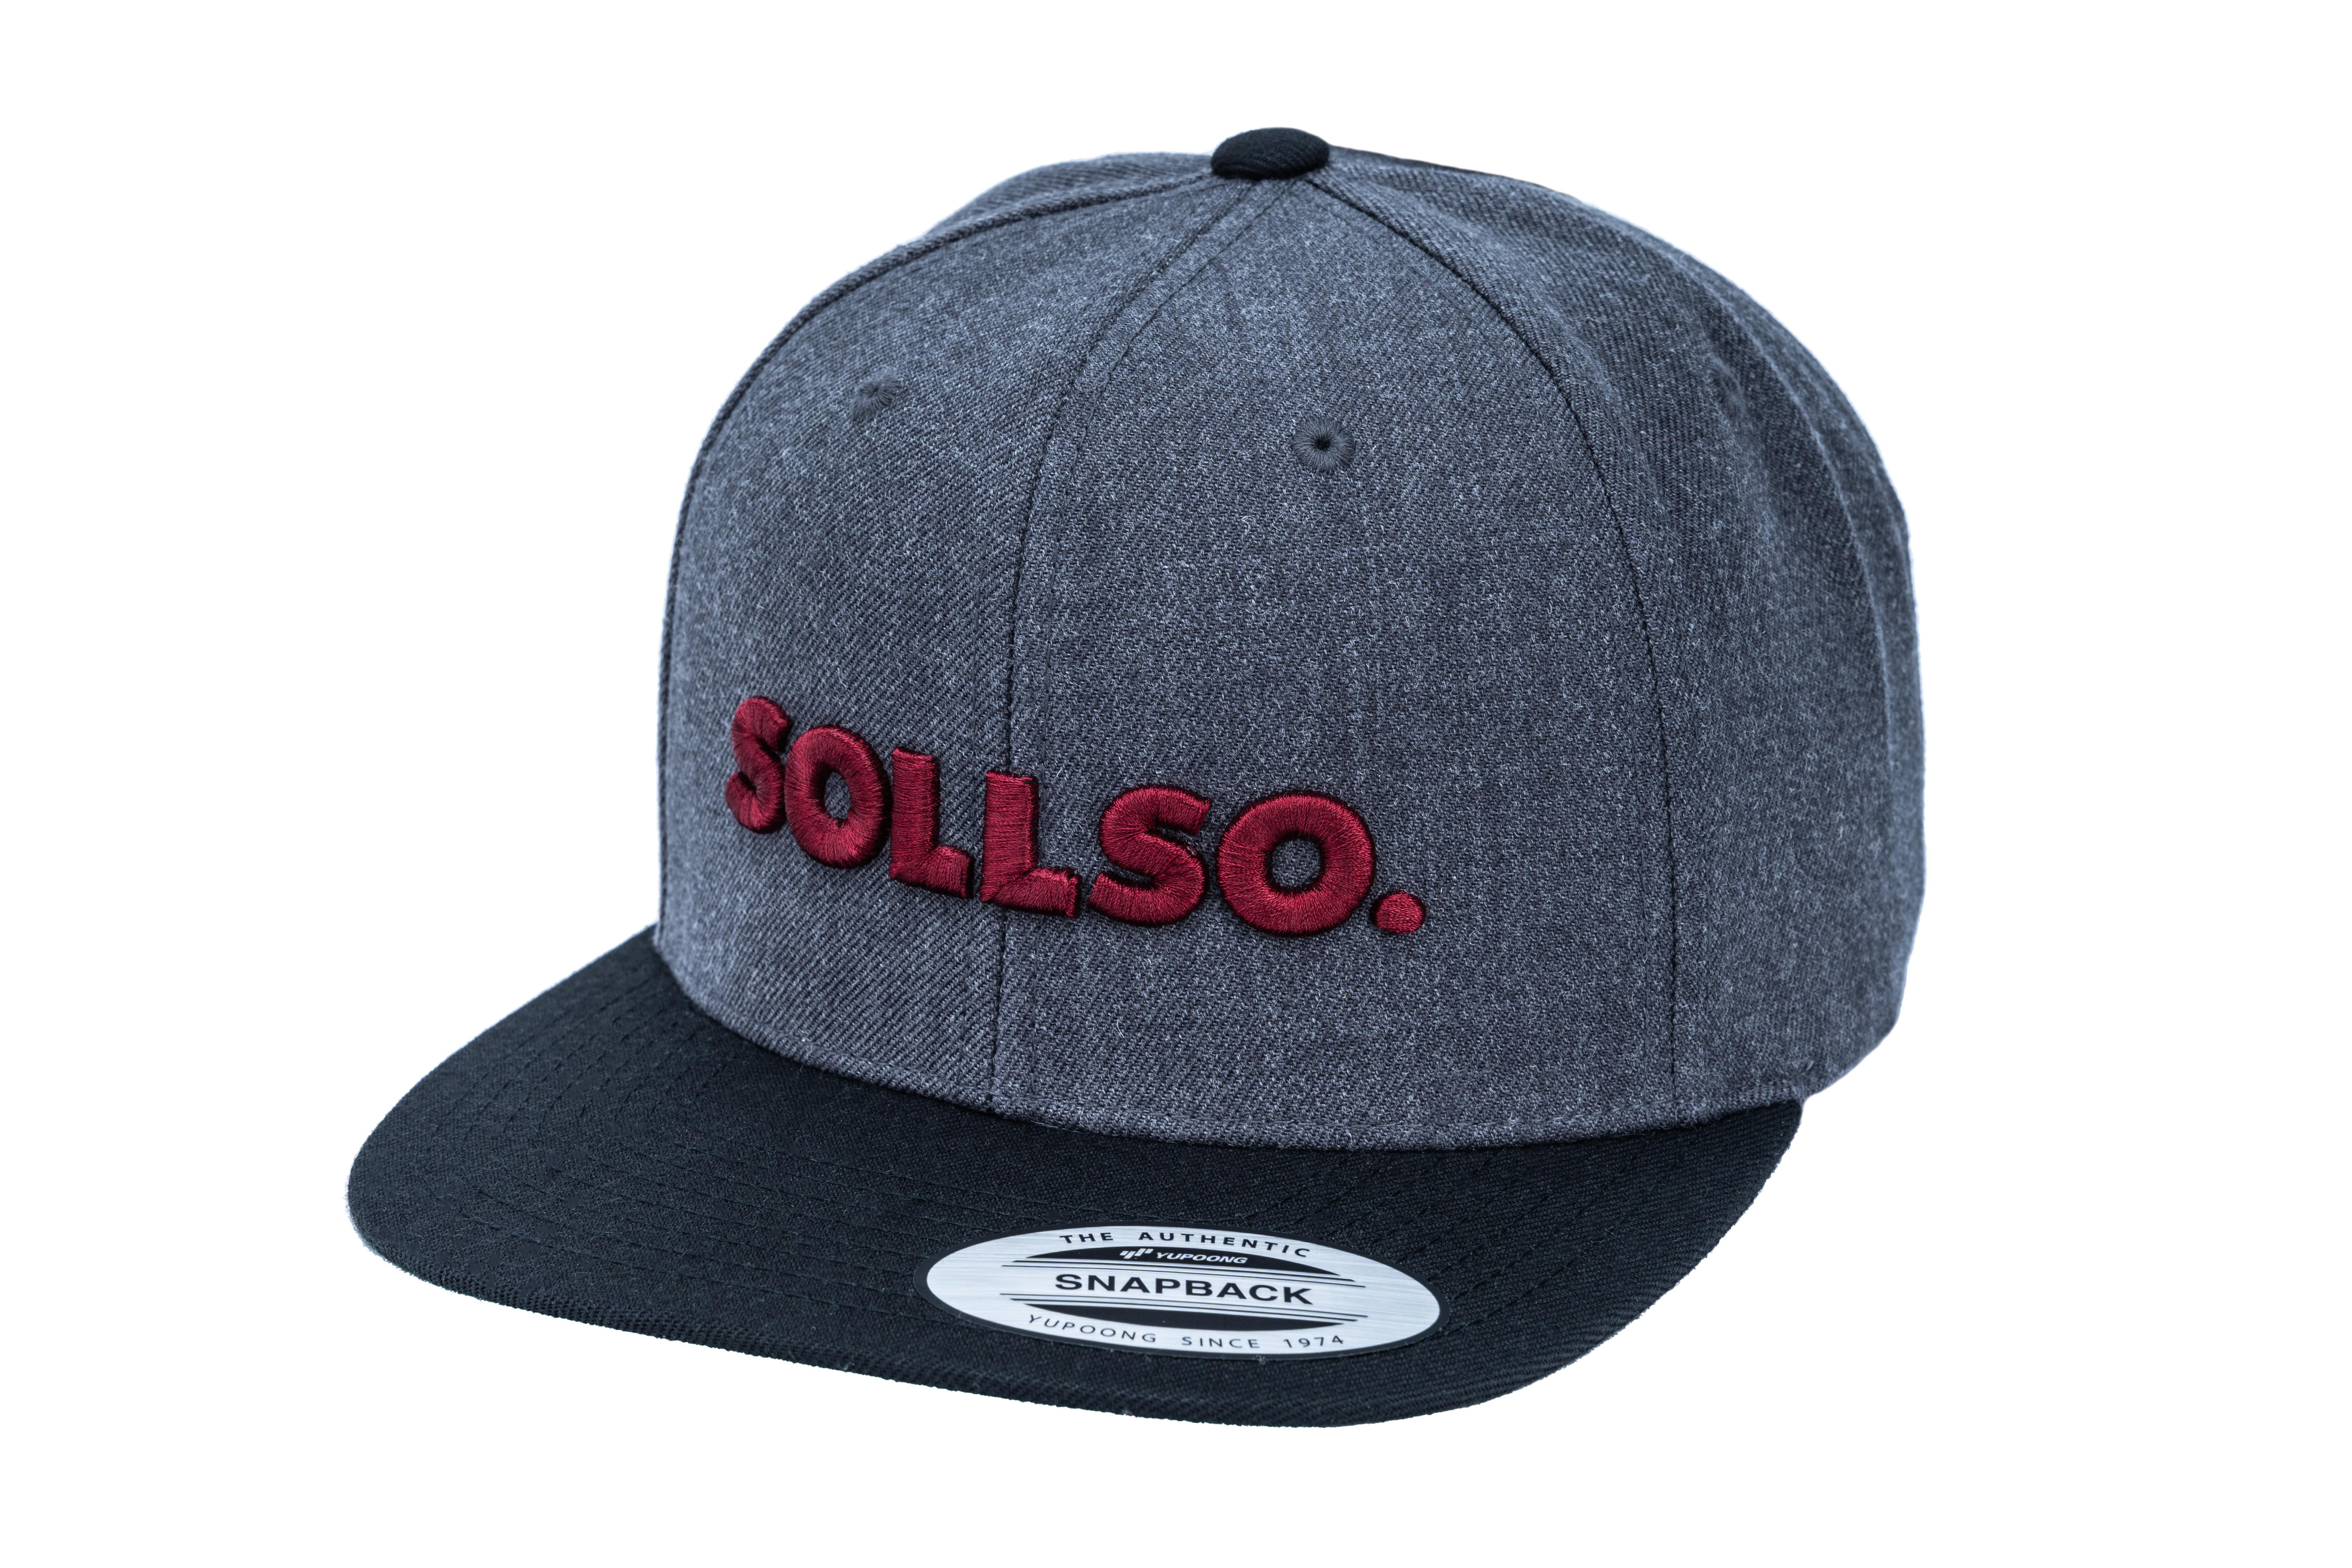 SOLLSO. Classic Snapback 2-Tone Cap, Charcoal-Black